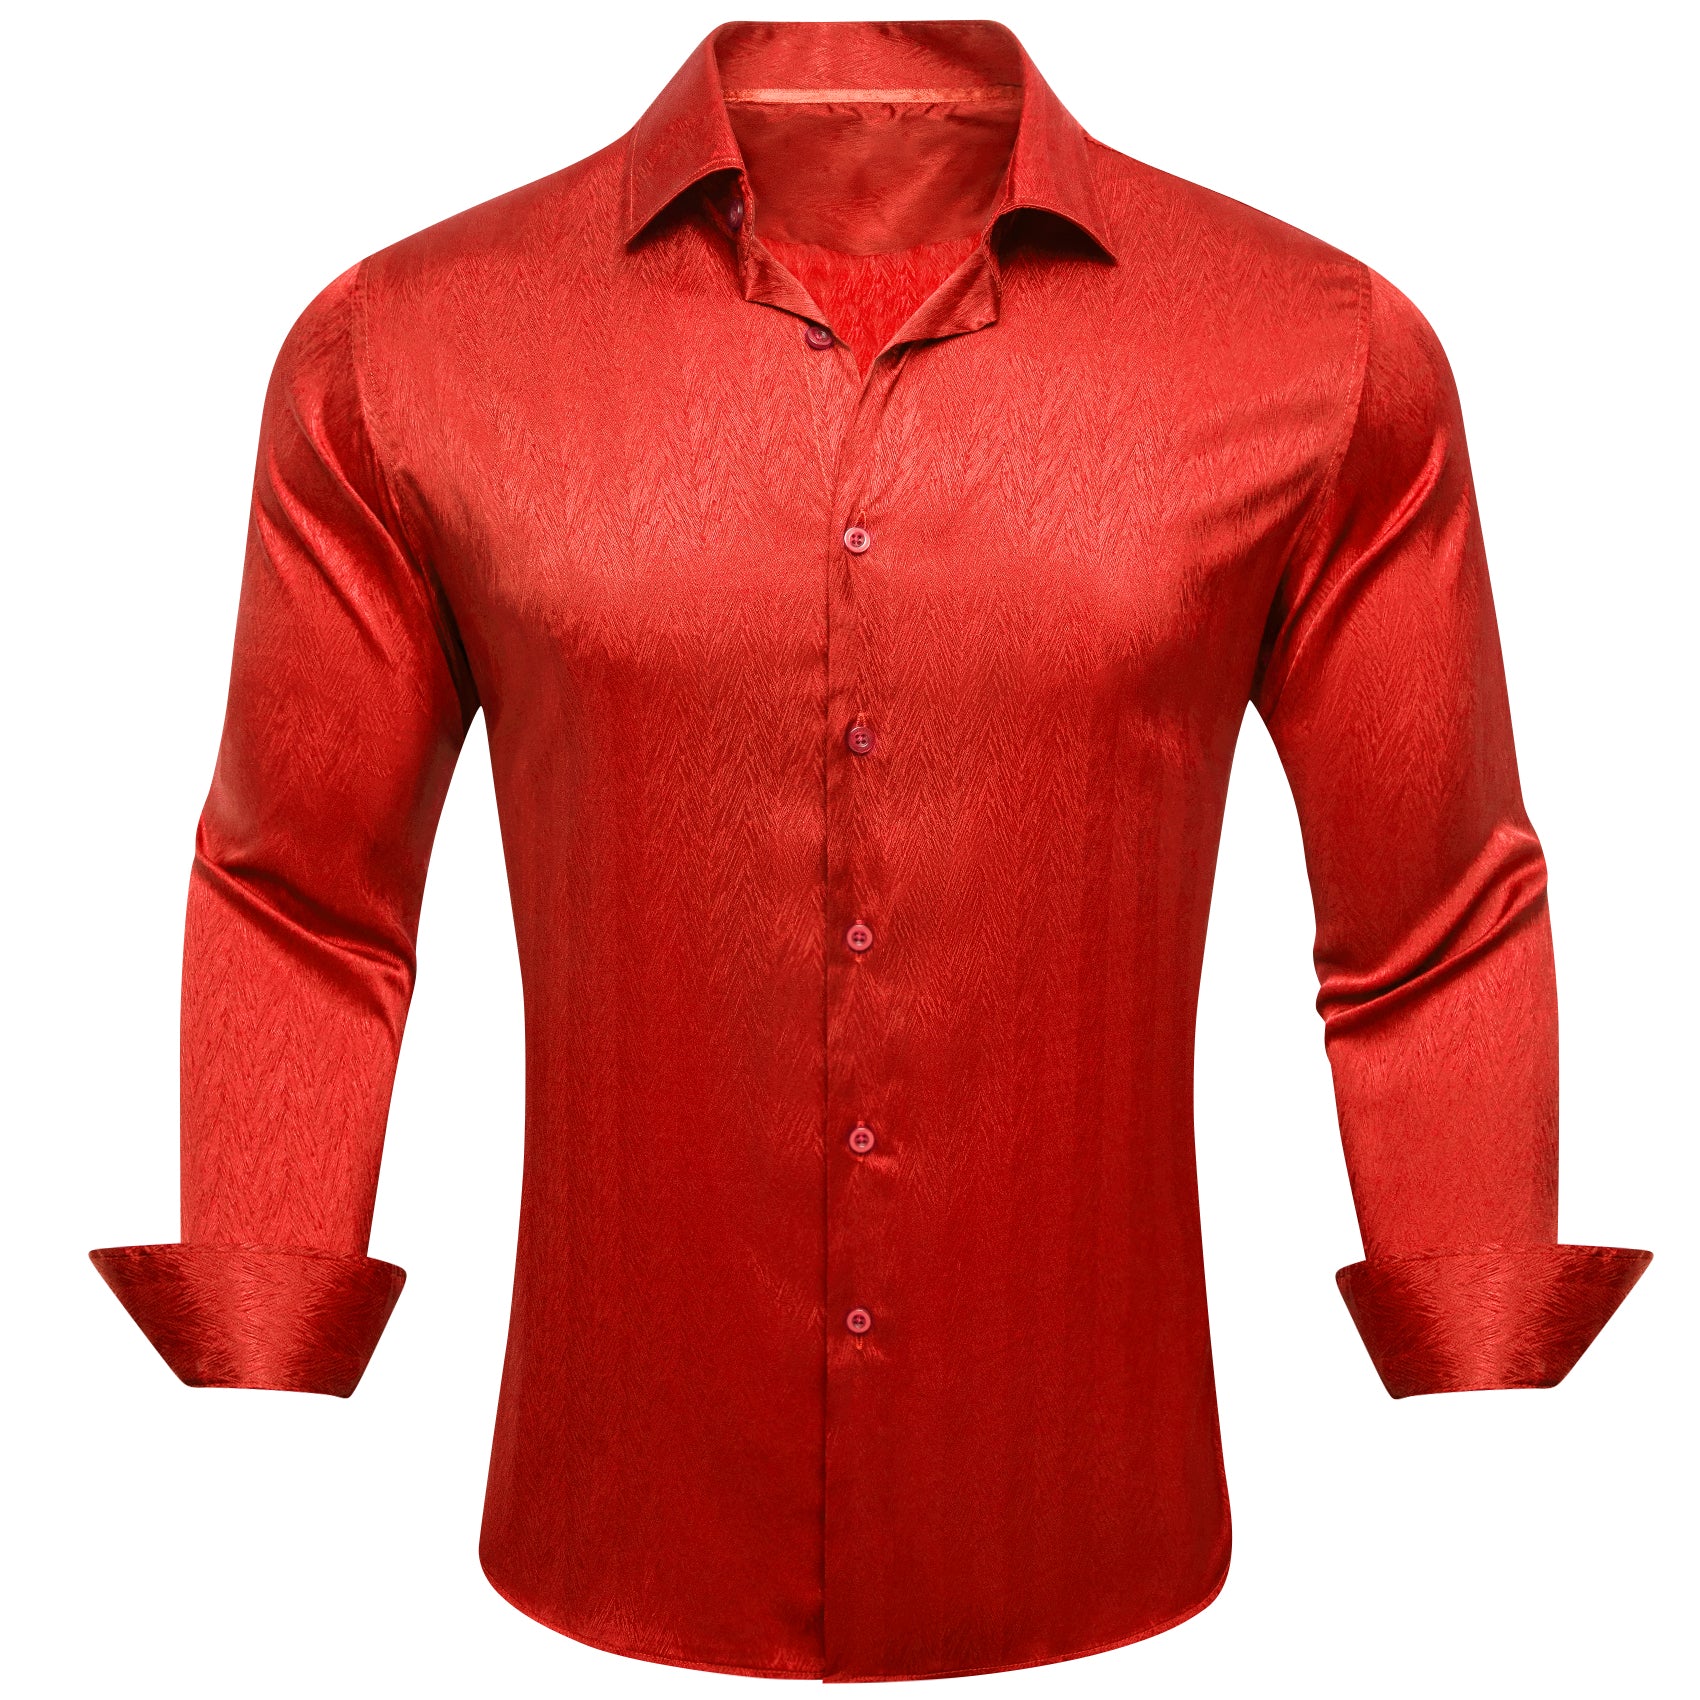 Barry.wang Strong Red Solid Silk Men's Shirt